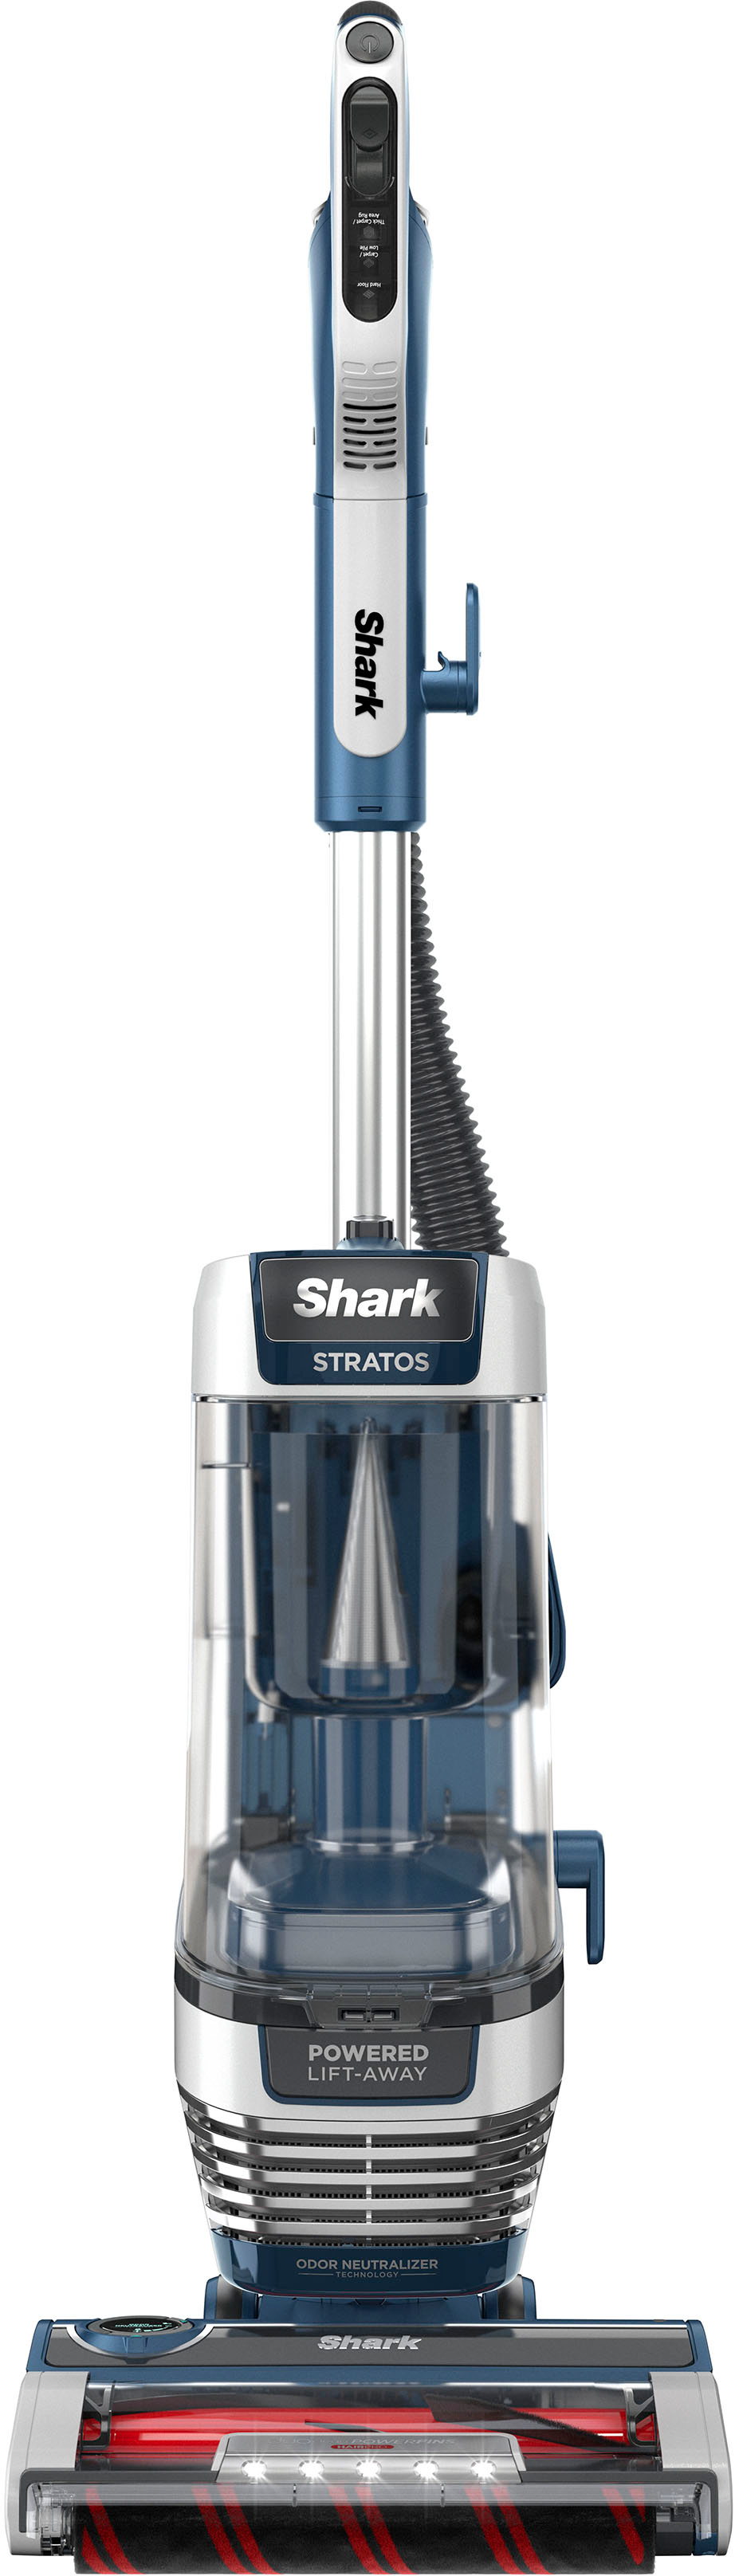 shark stratos az3002